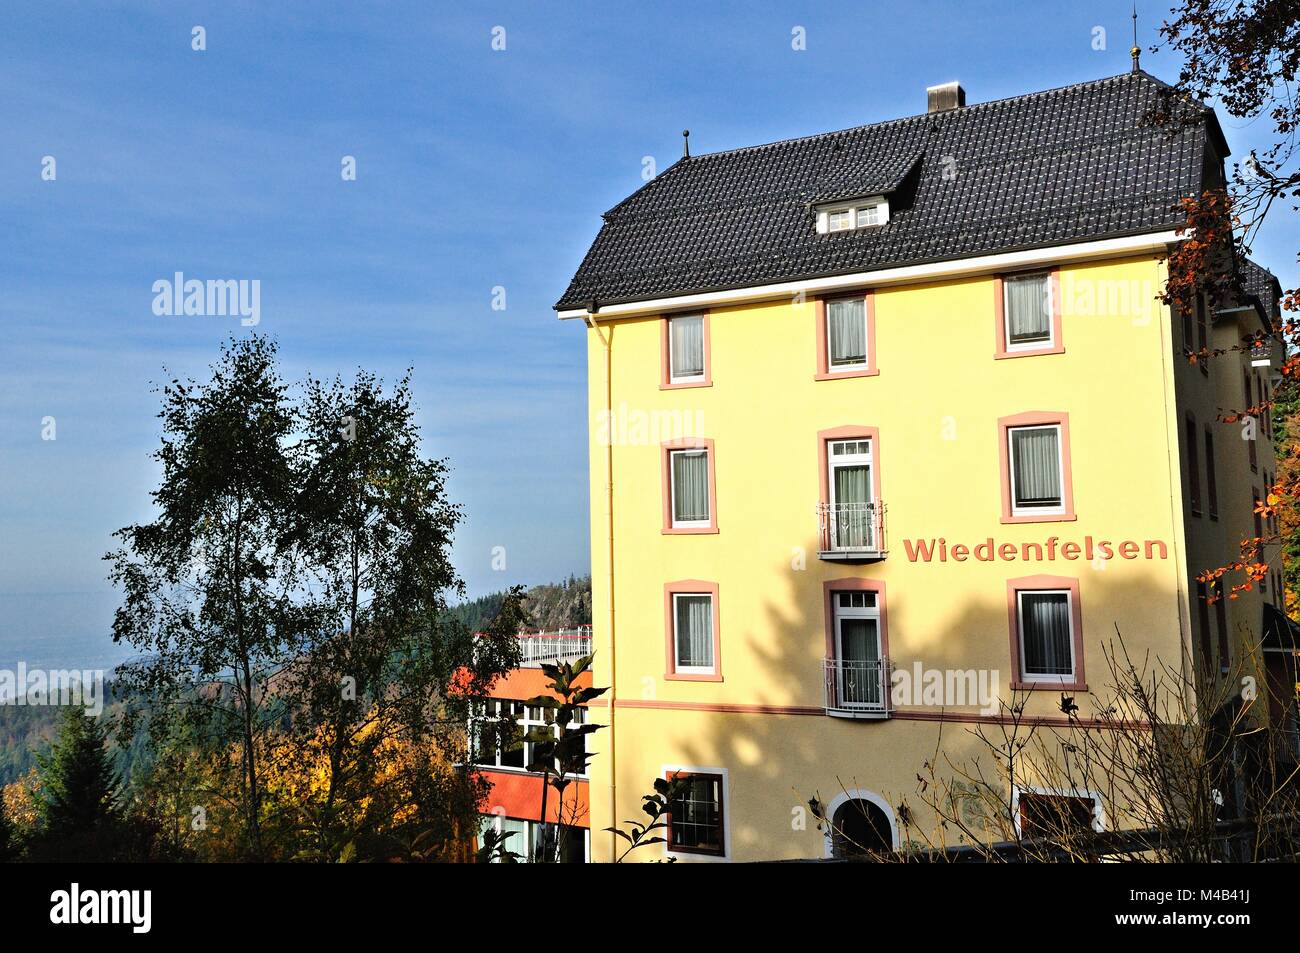 House Wiedenfelsen in Bühlertal Black Forest Germany Stock Photo